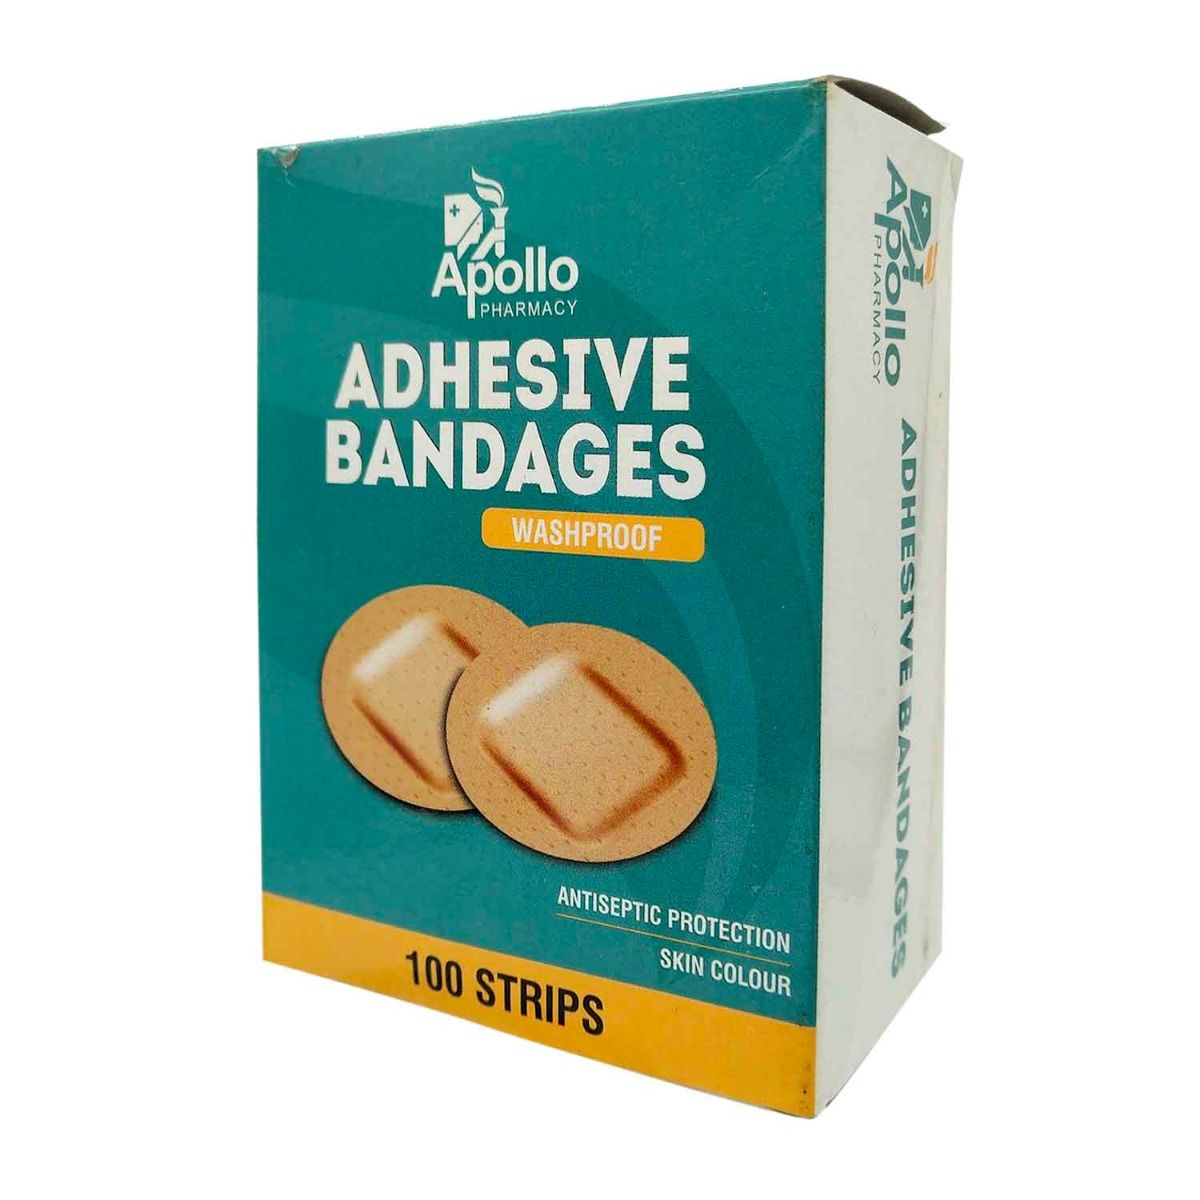 Apollo Pharmacy Adhesive Round Bandage Wash Proof, 1 Count, Pack of 1 